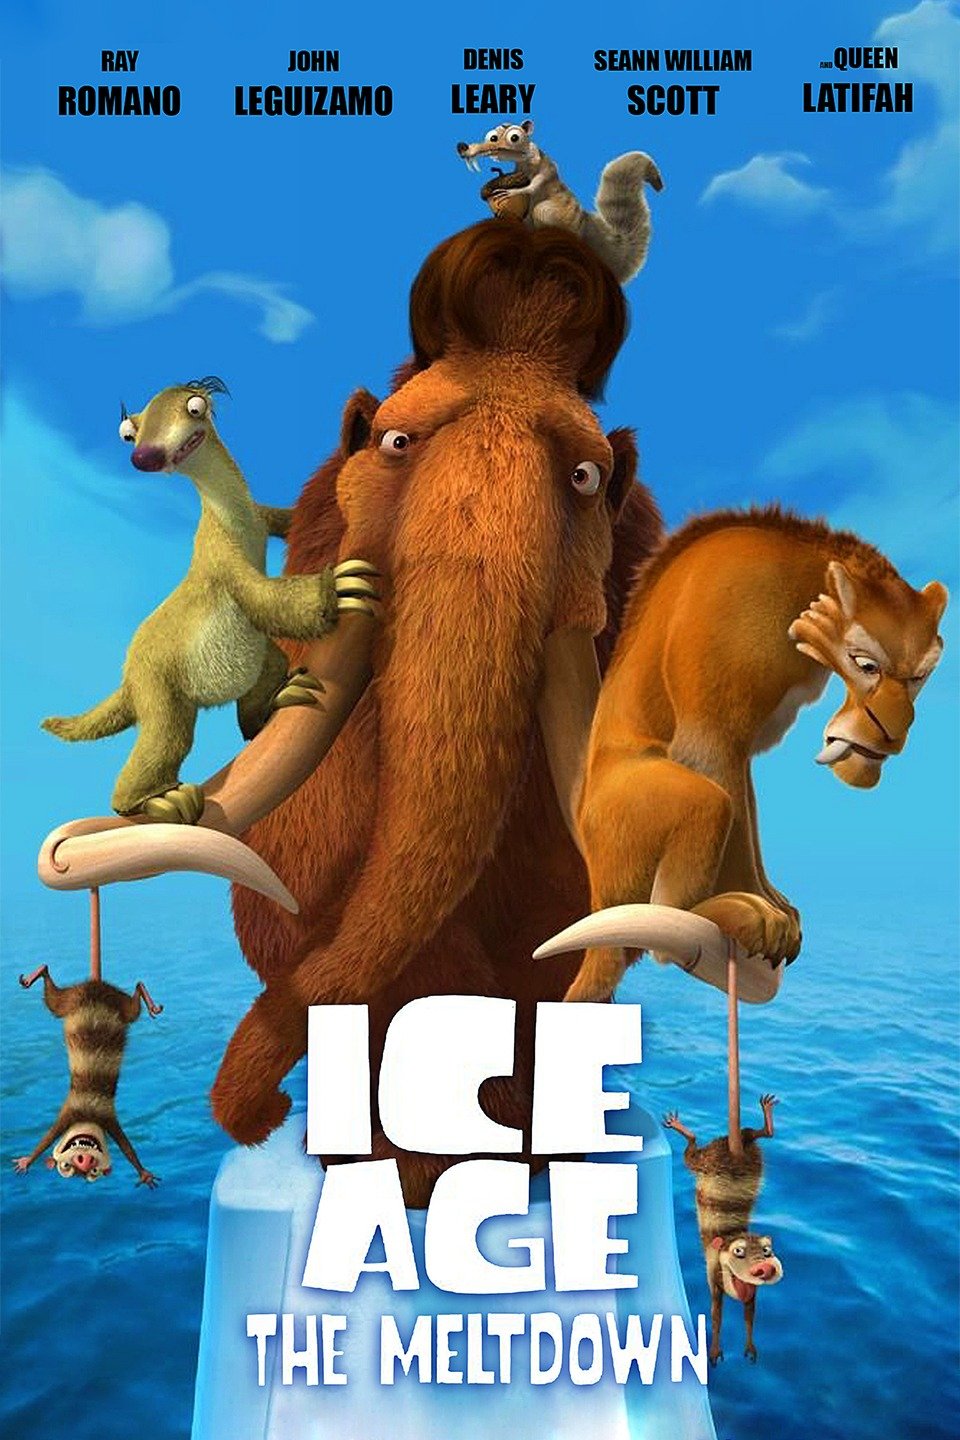 [MINI-HD] Ice Age: The Meltdown (2006) ไอซ์ เอจ 2 เจาะยุคน้ำแข็งมหัศจรรย์ [1080p] [พากย์ไทย 5.1 + อังกฤษ DTS] [x264] [บรรยายไทย + อังกฤษ] [เสียงไทย + ซับไทย] [ONE2UP]